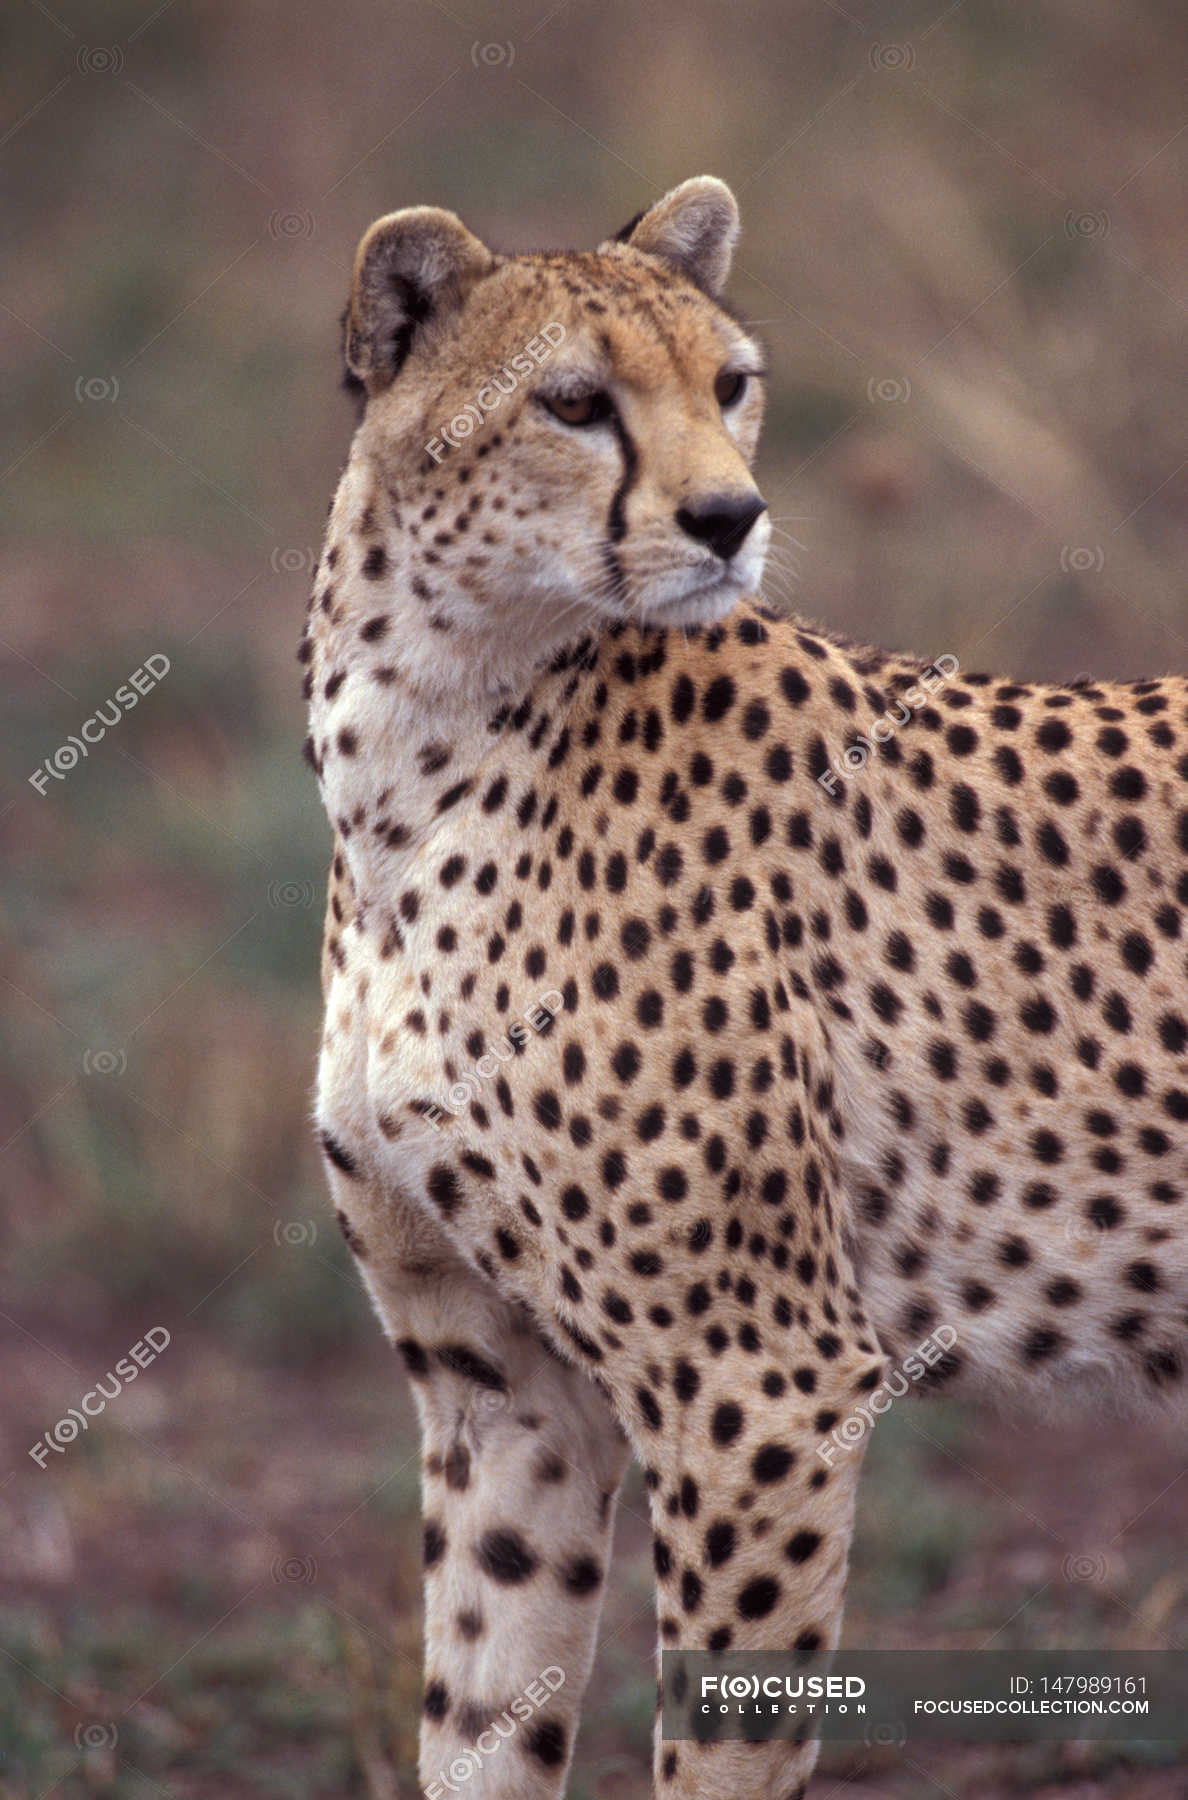 Wild cheetah in habitat — Stock Photo | #147989161